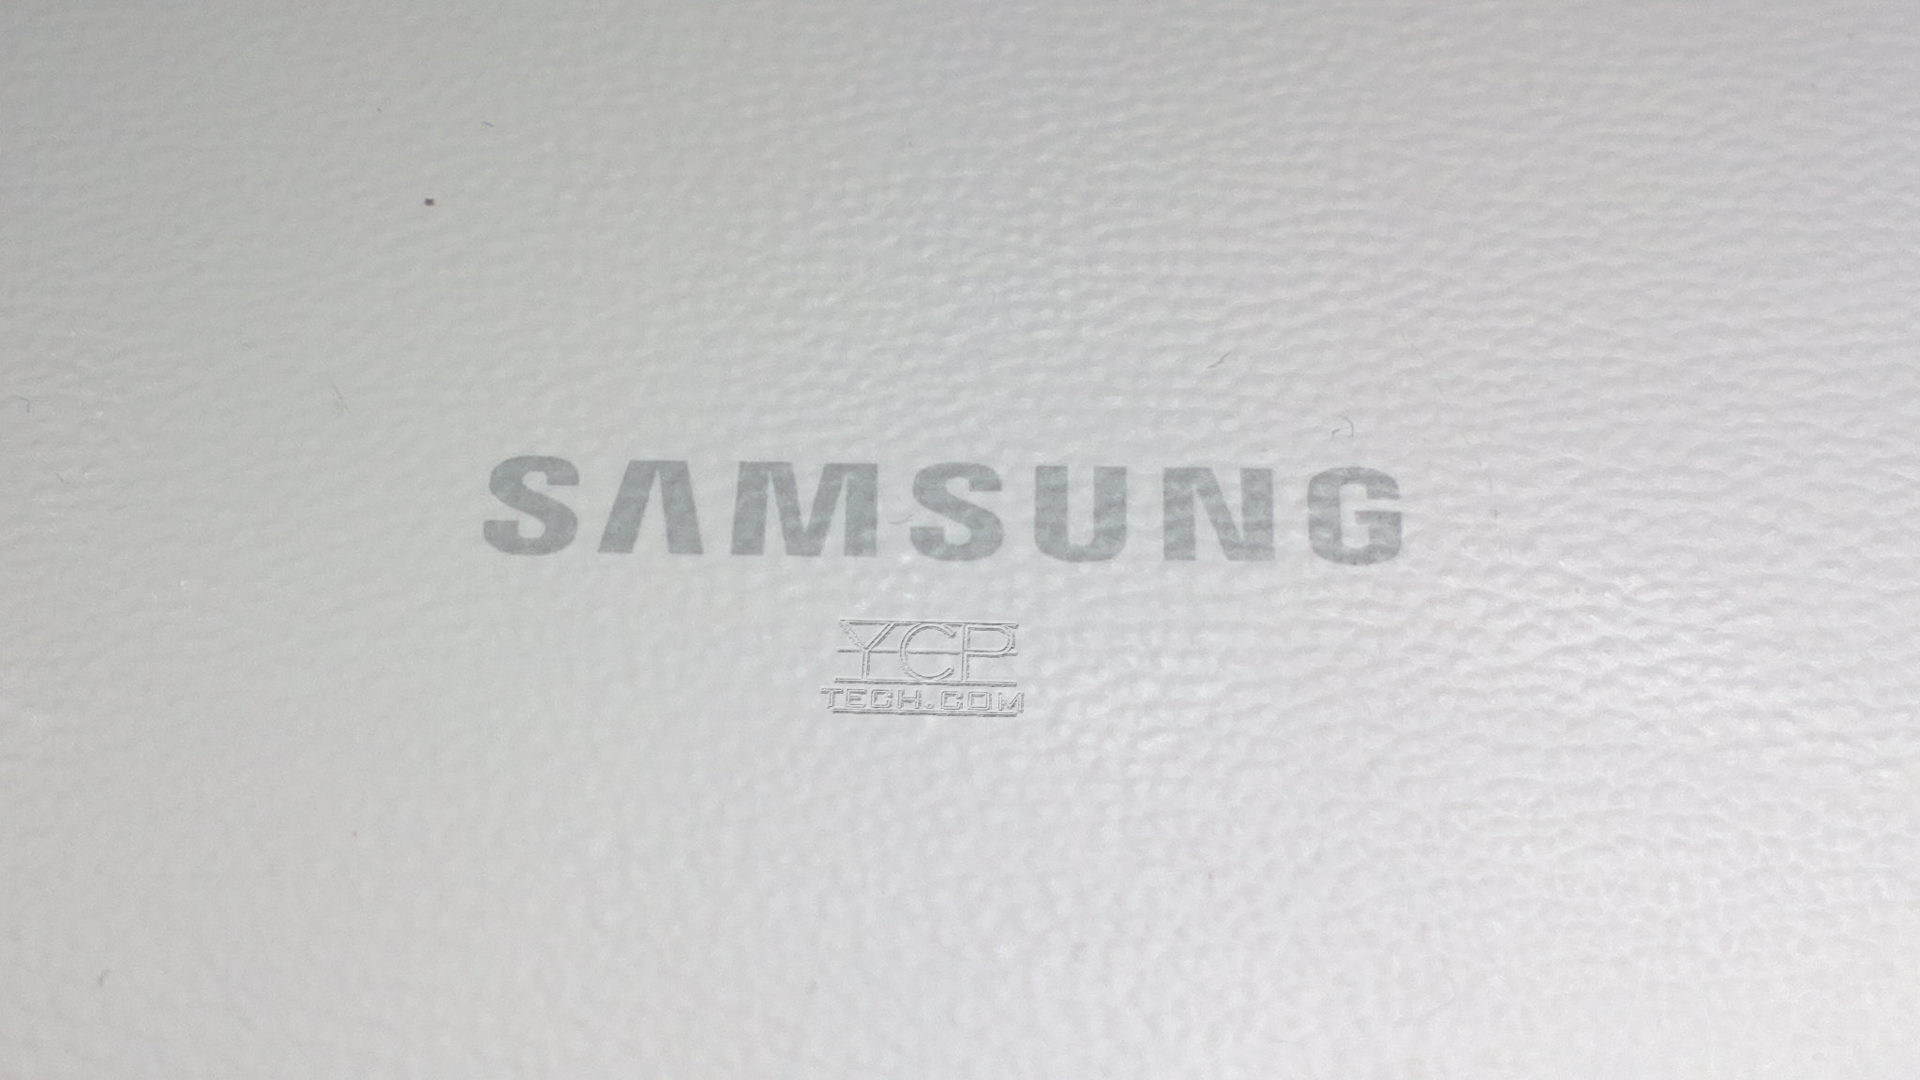 Samsung Galaxy Tab Pro 8.4 Review